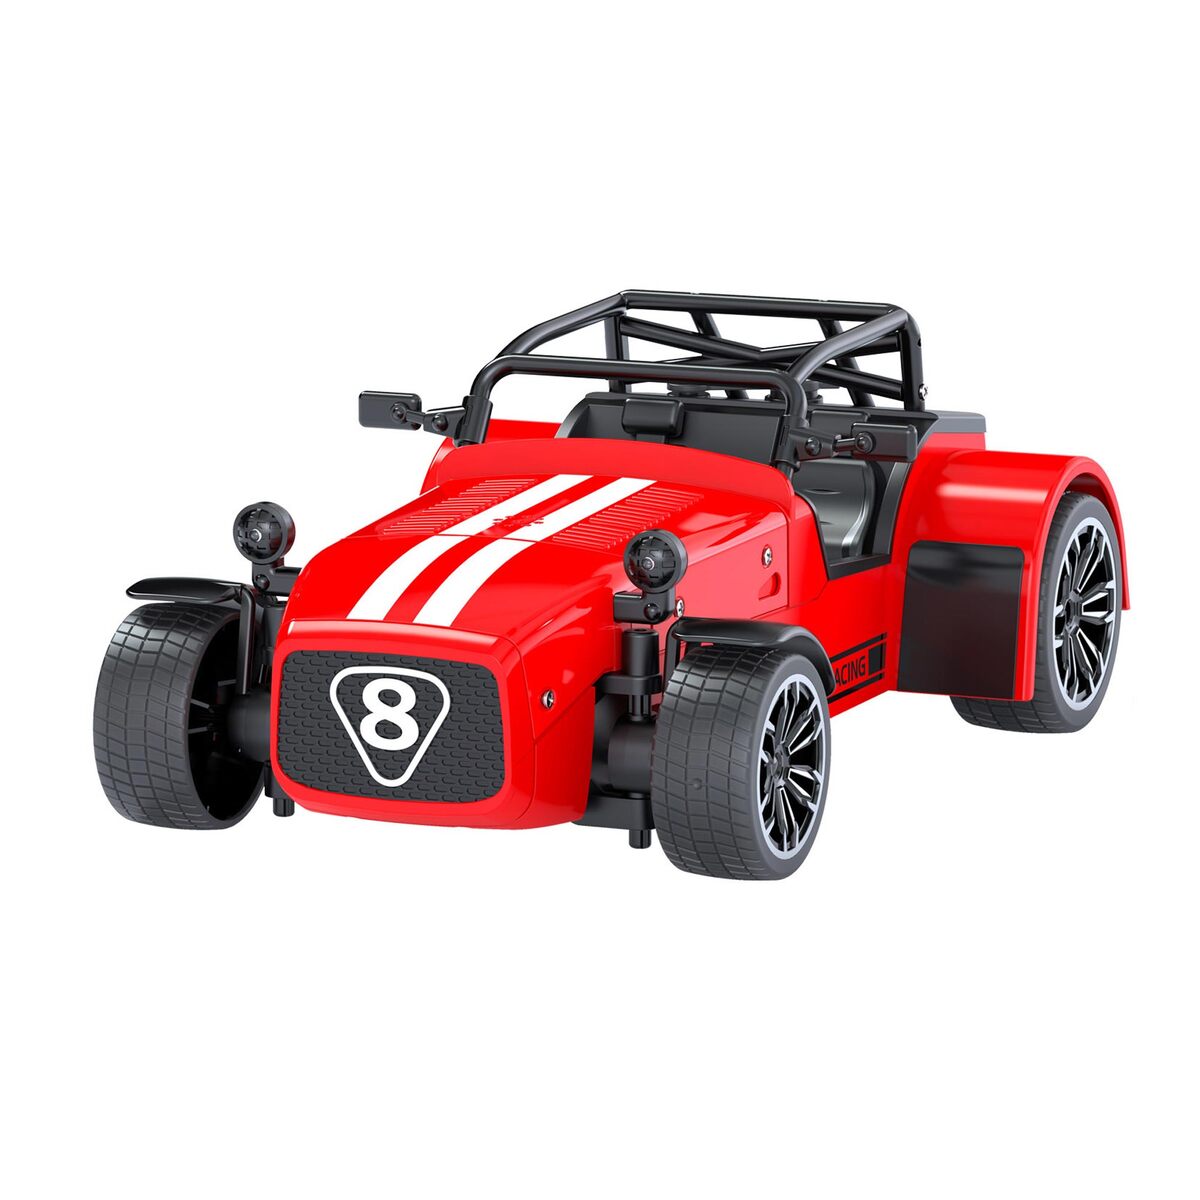 Spray Racing Car-GHD383112 Assorted color